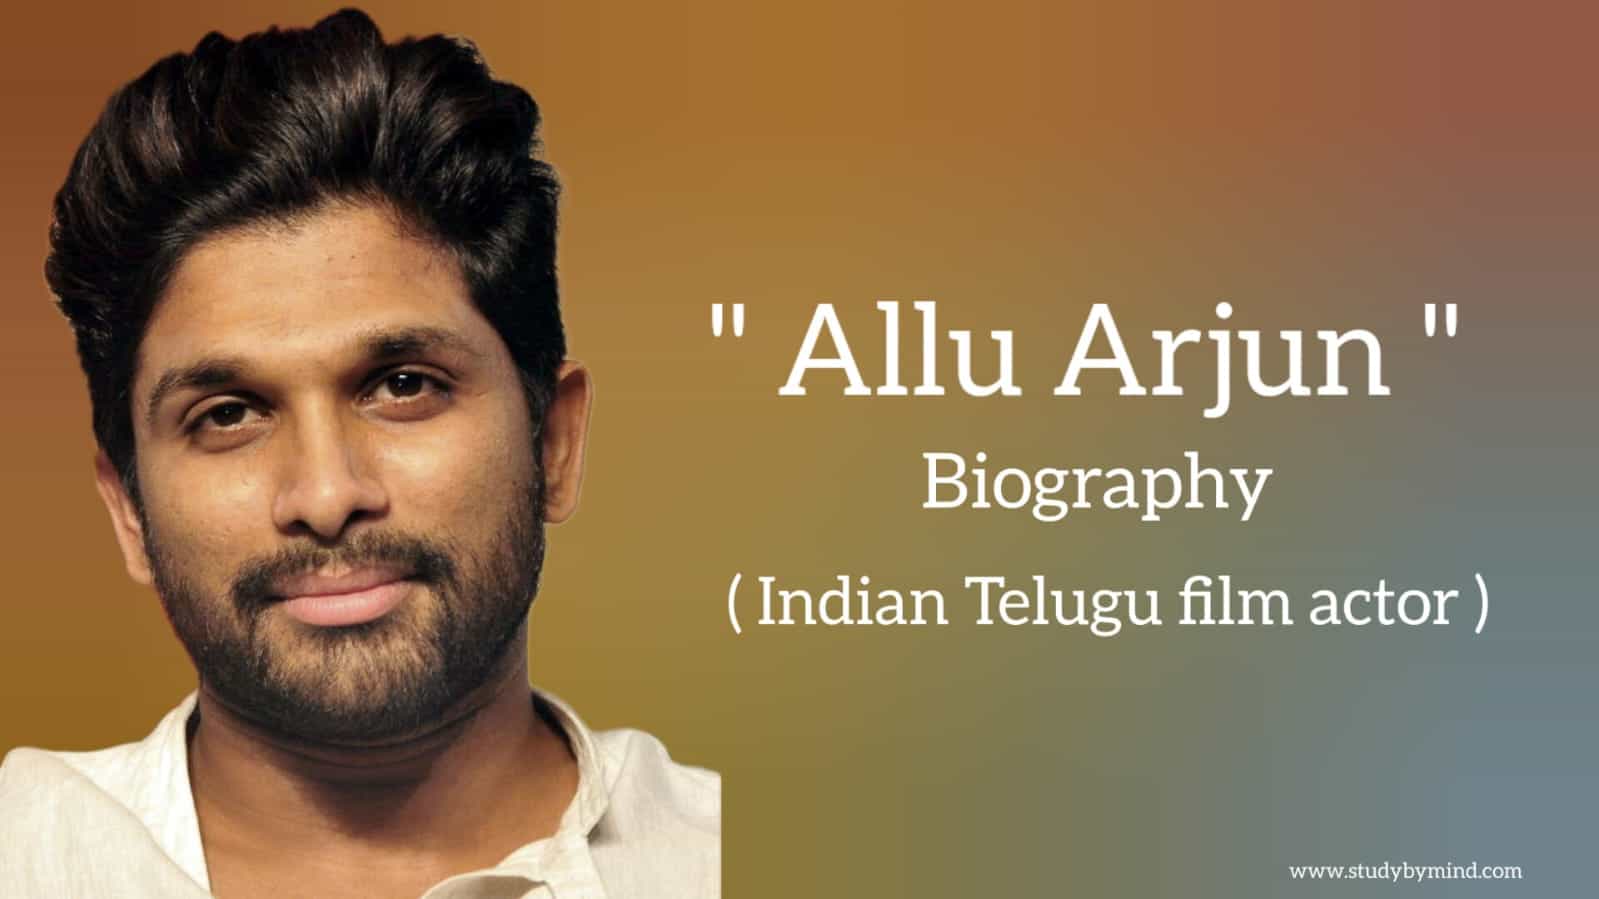 Allu arjun biography in english (Indian Telugu Film Actor), Age ...